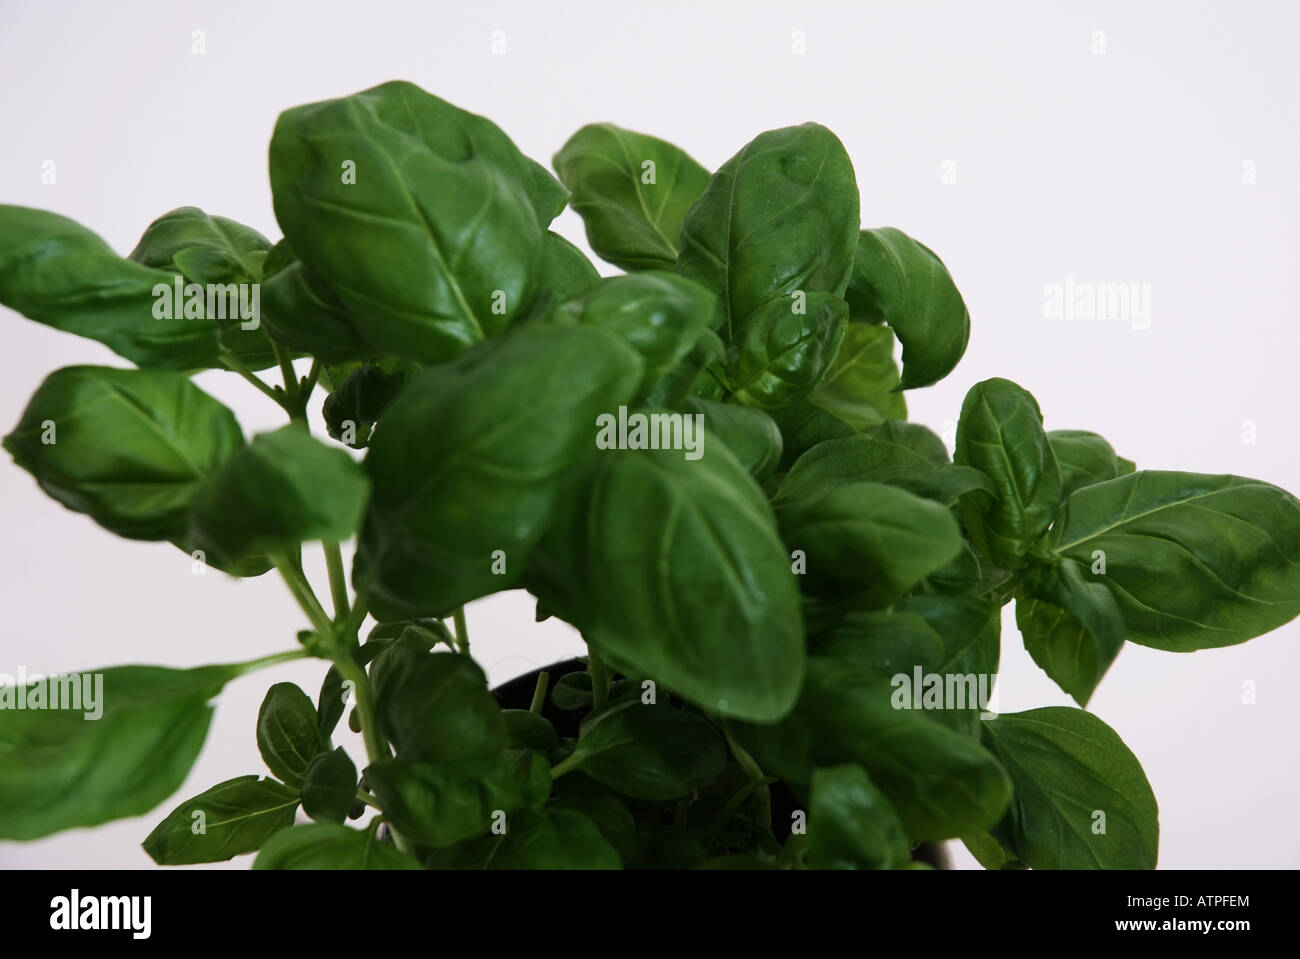 Basilikum (Ocimum basilicum) plant Stock Photo